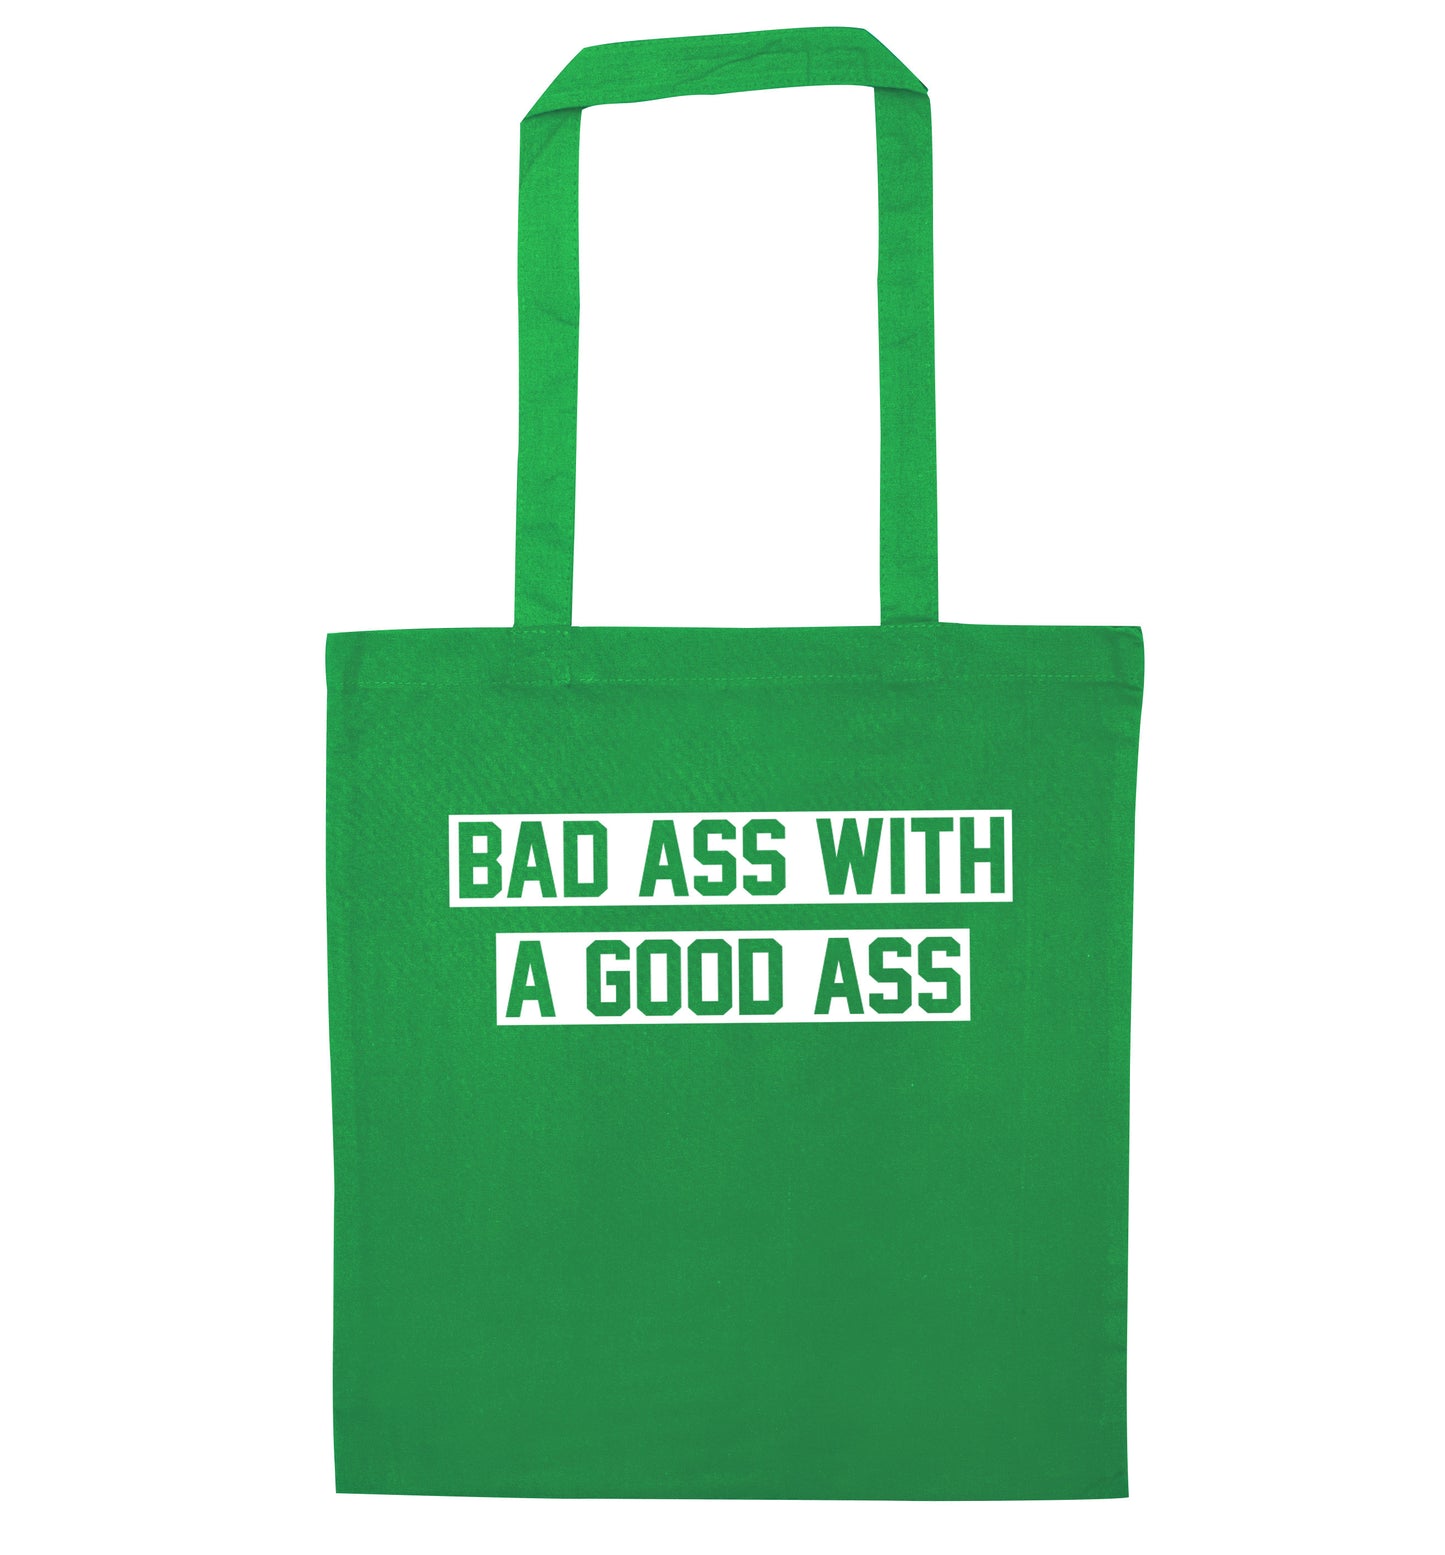 A bad ass with a good ass green tote bag